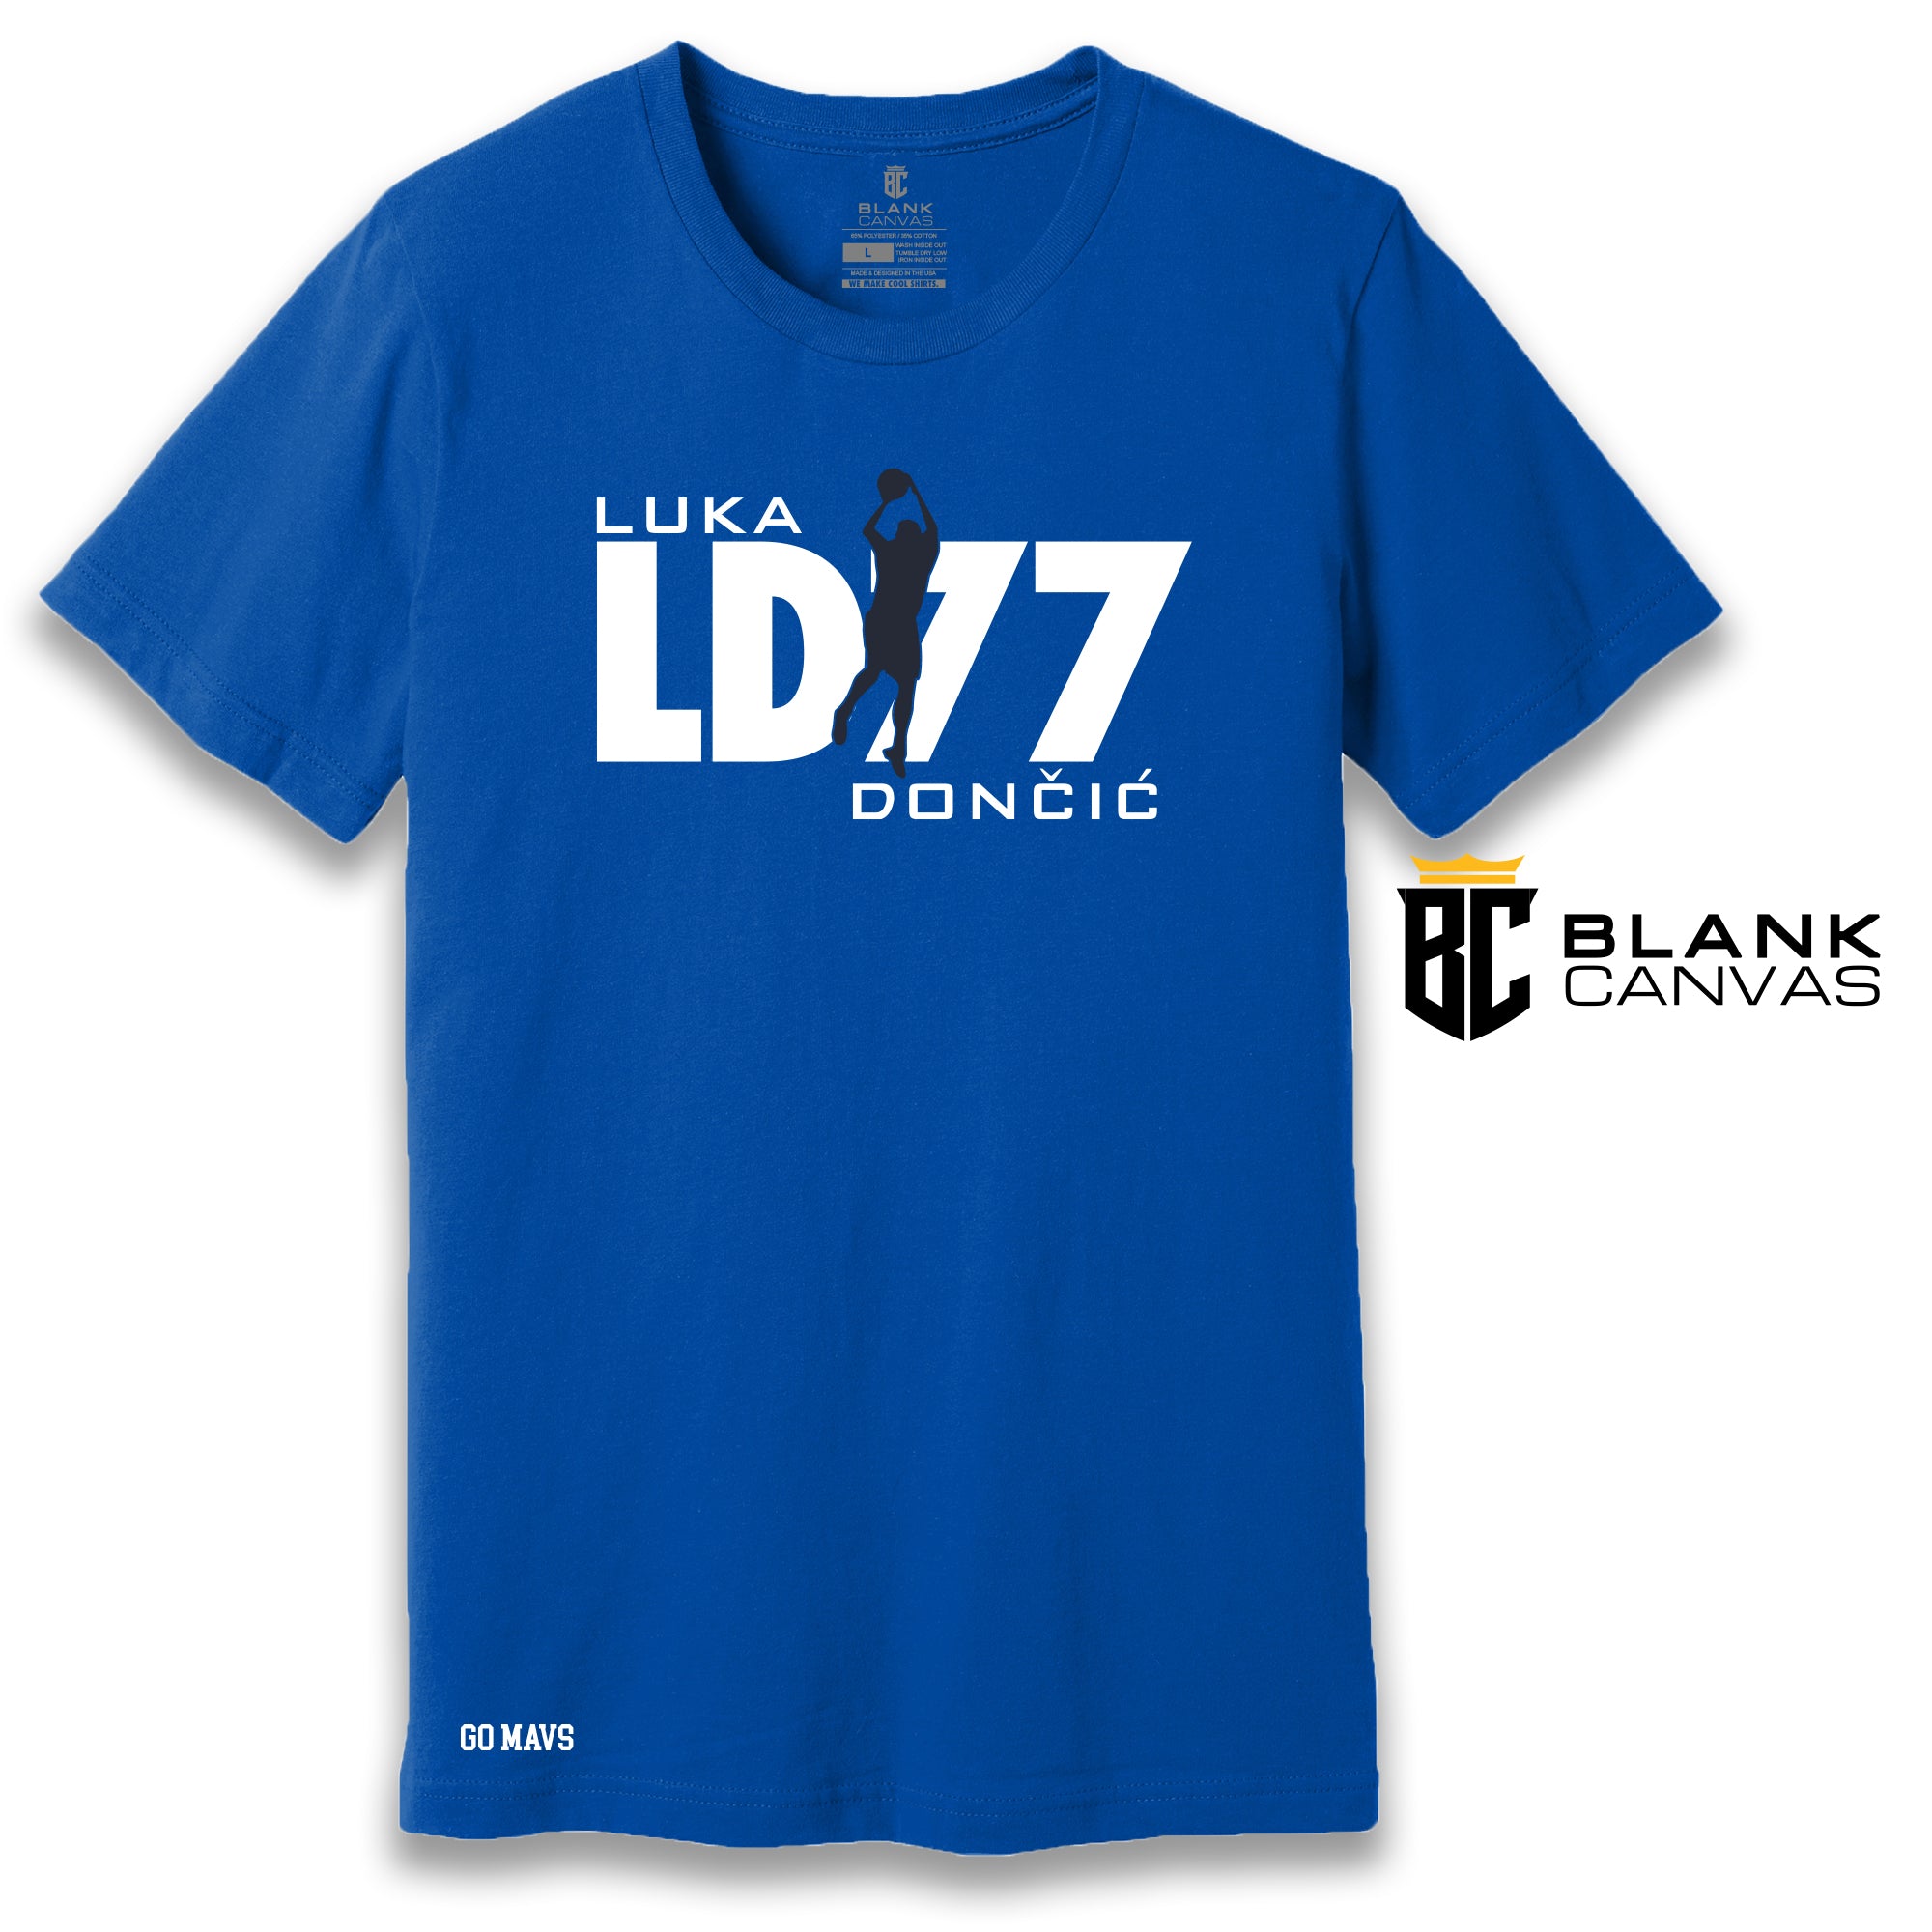 Luka Doncic Dallas Mavericks Playoffs LD77 T-Shirt